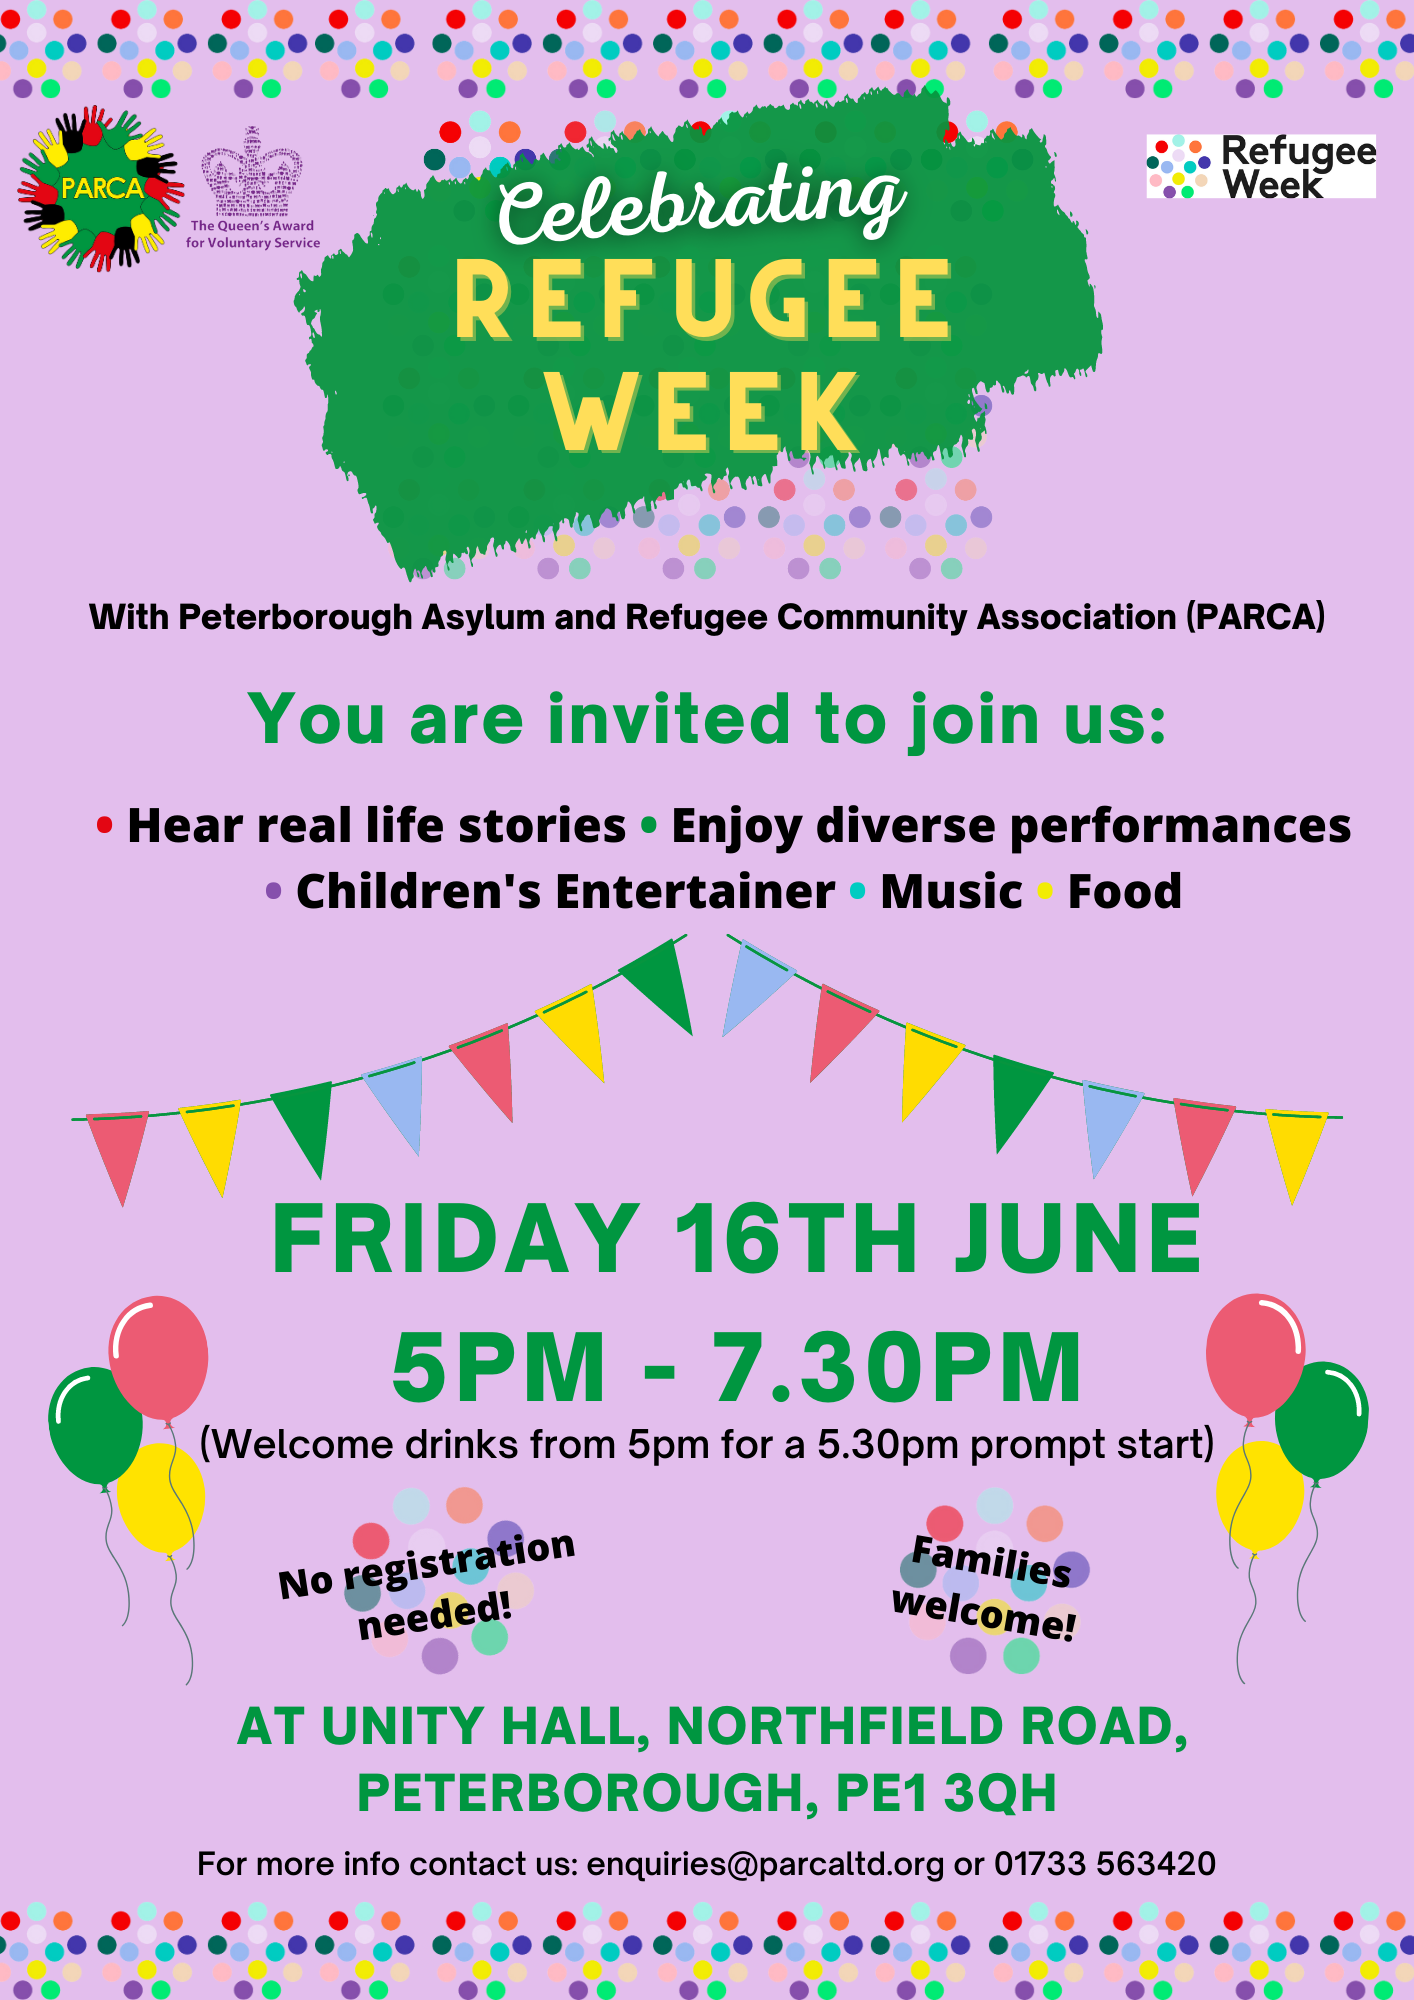 Celebrating Refugee Week with PARCA